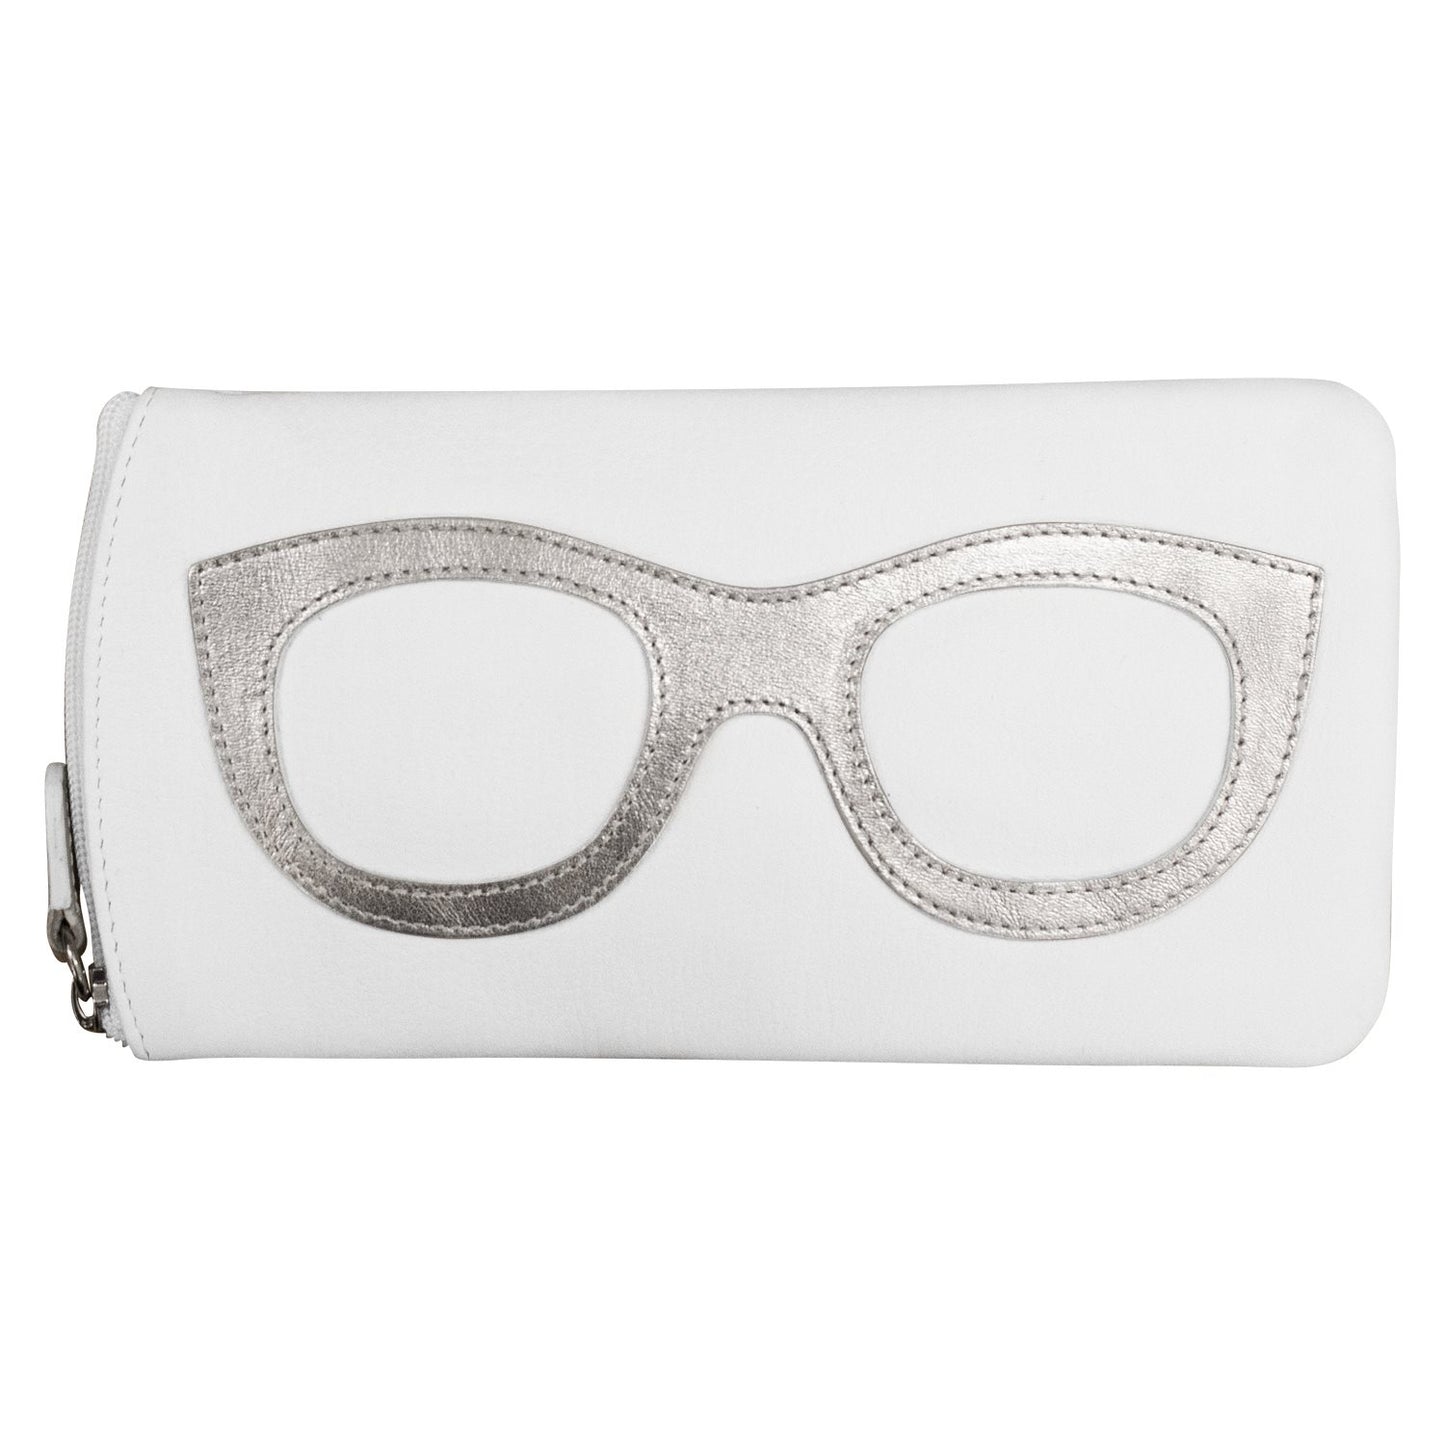 Eyeglass Case with Frame Graphic - Oprah's Favorite